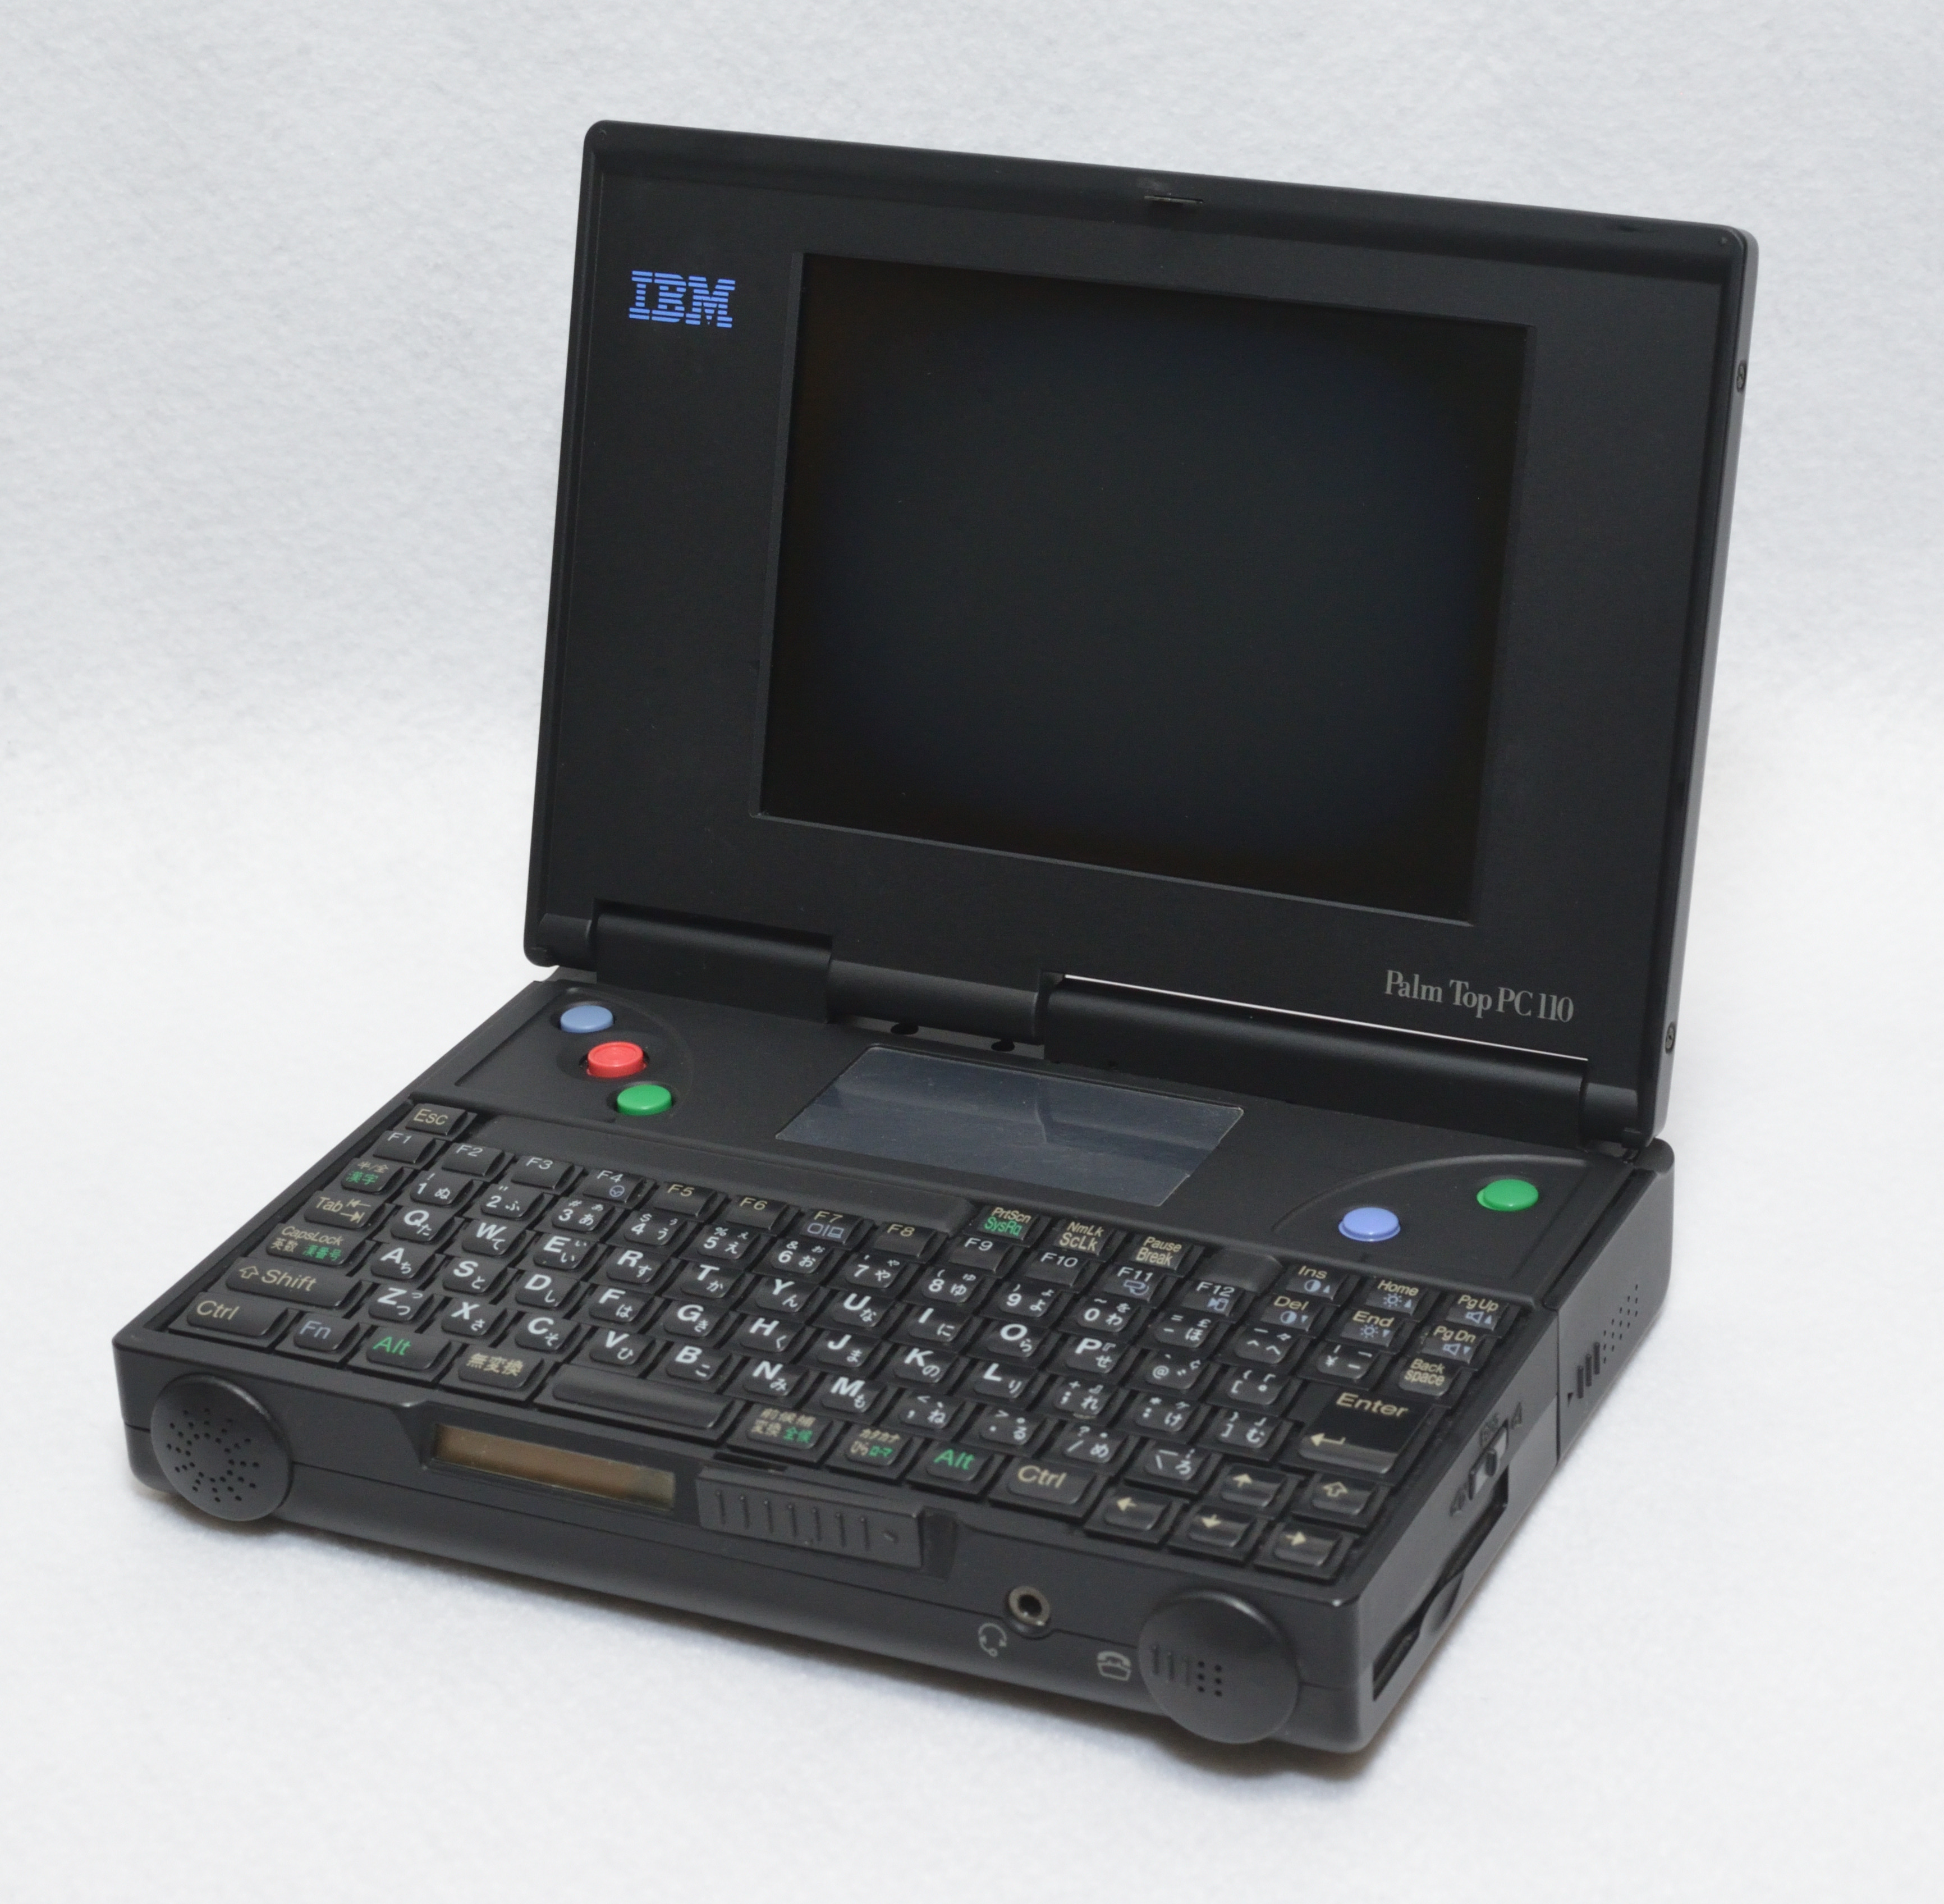 Palm Top PC 110 - Wikipedia